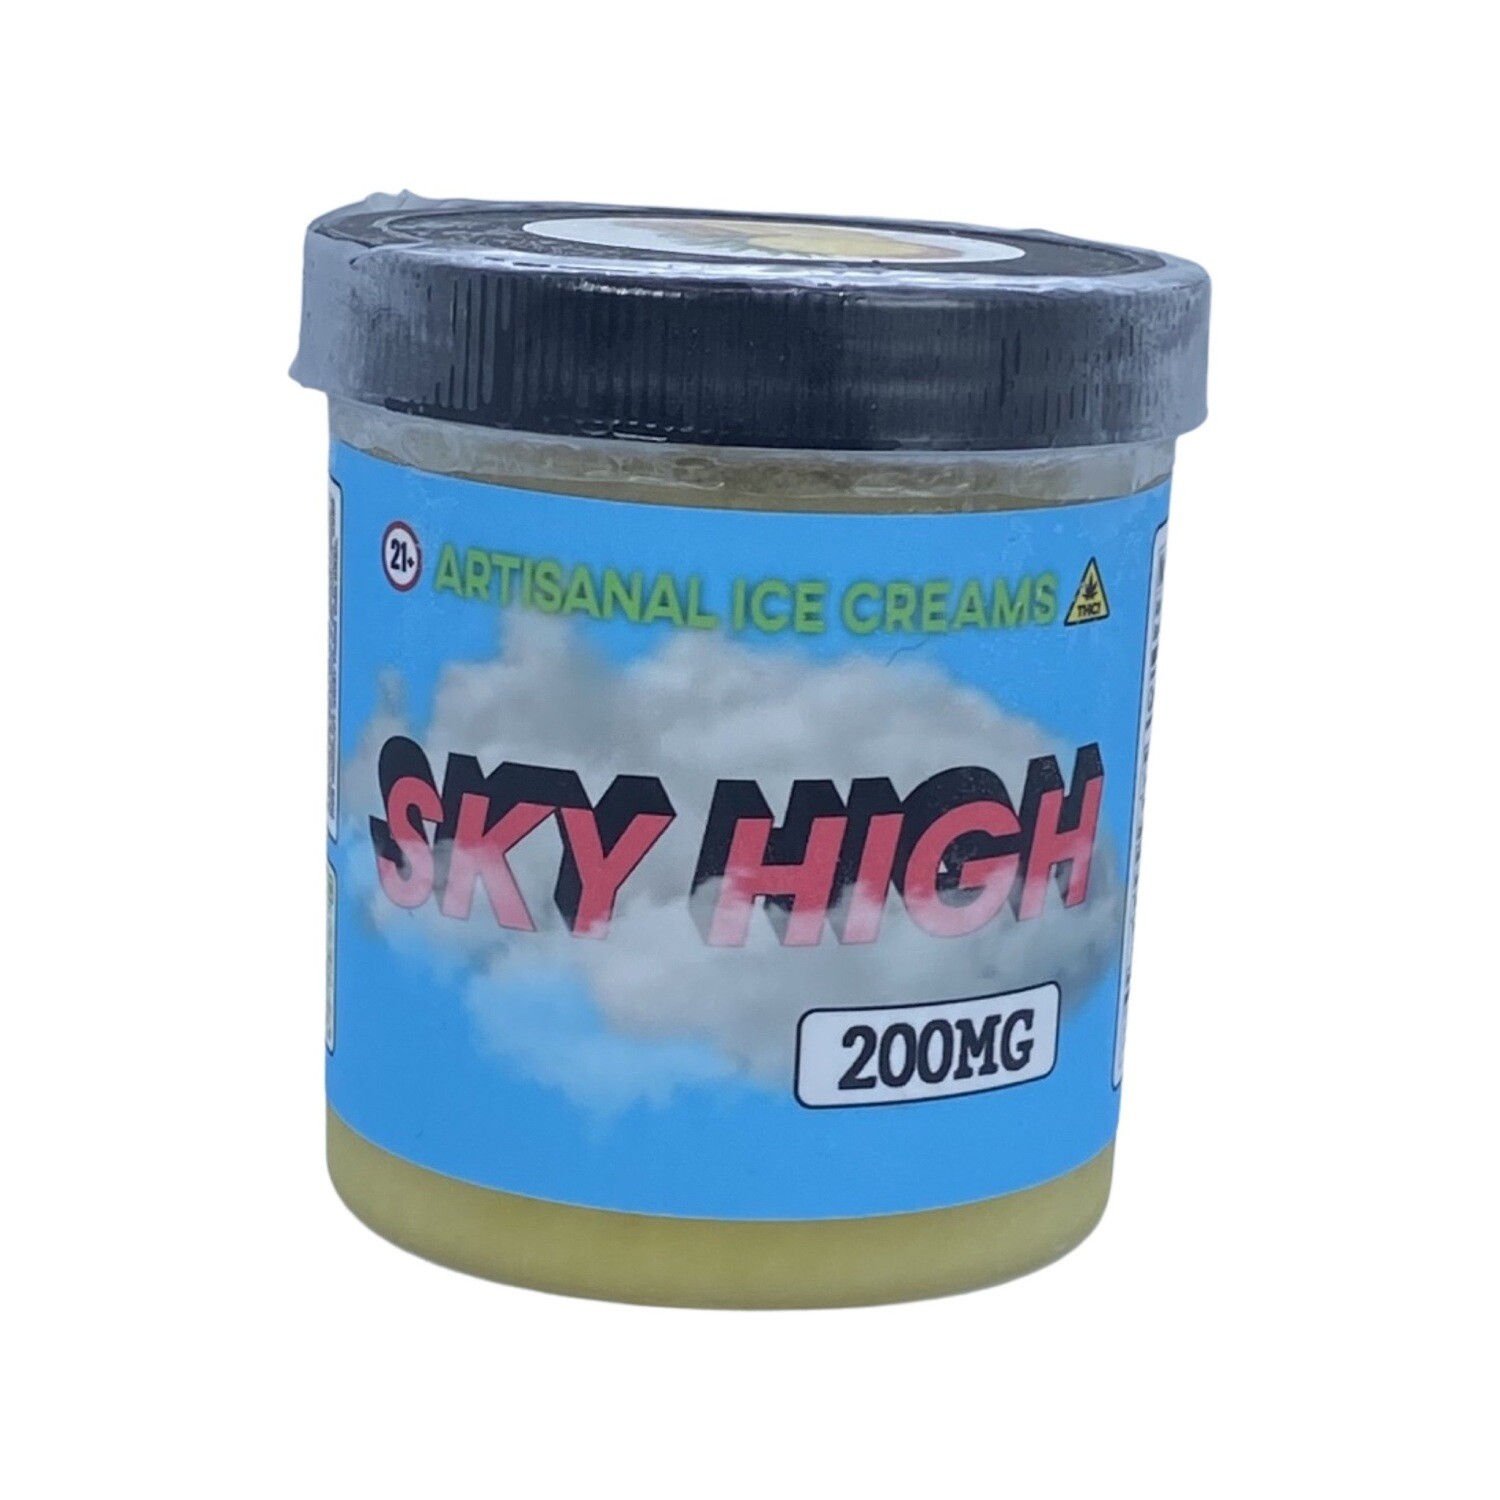 Sky High Ice Cream